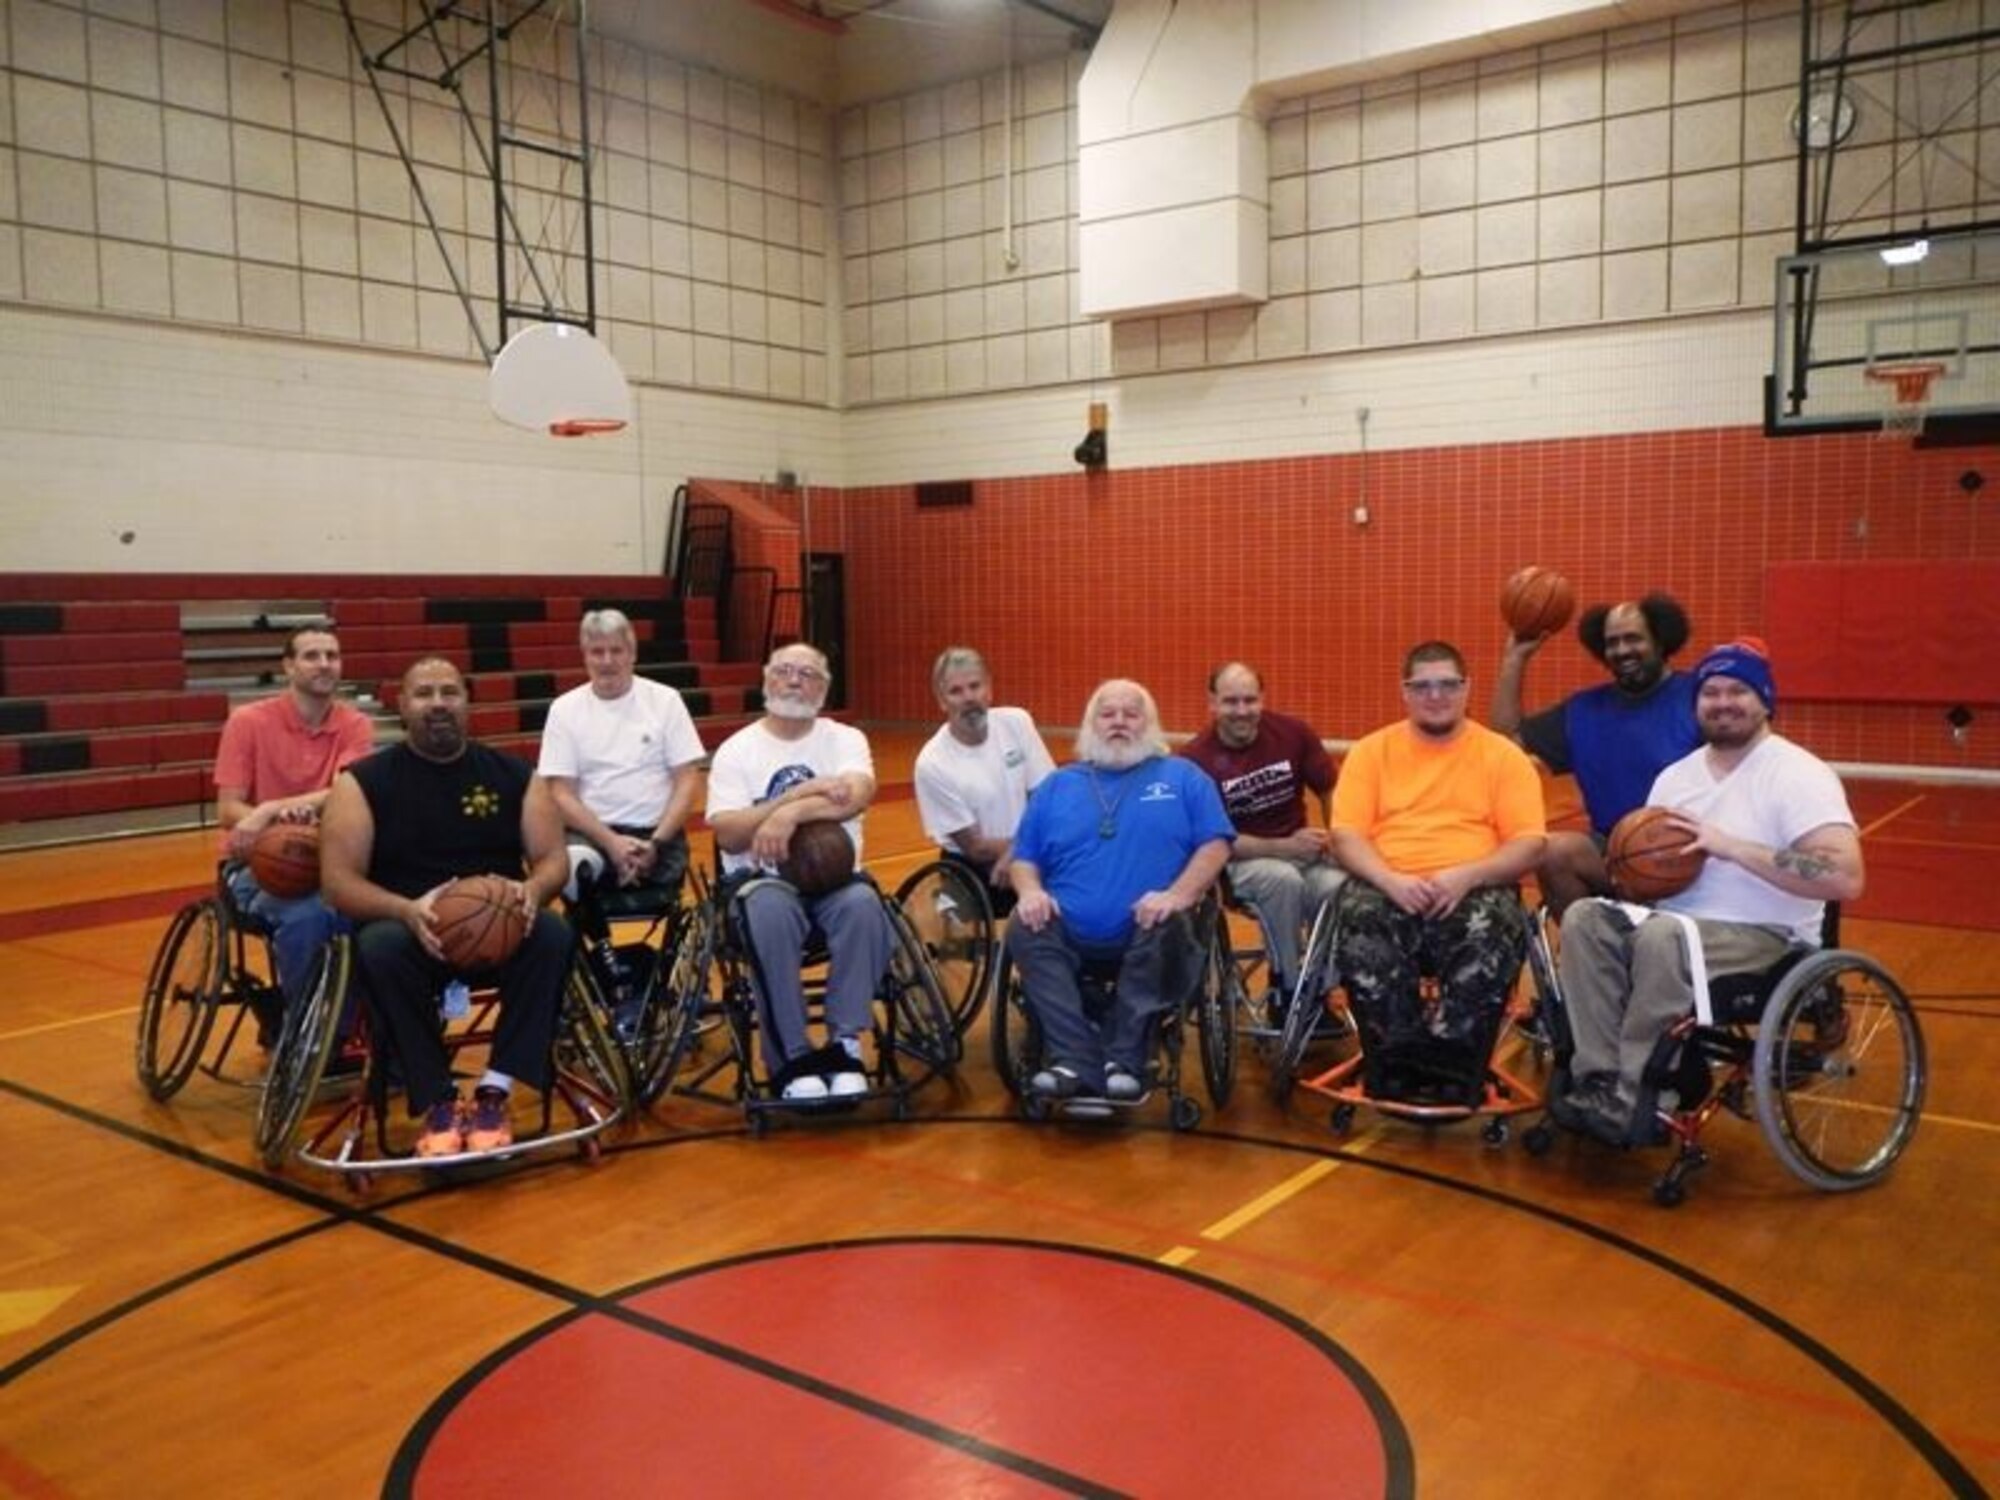 The RTI-Wheelin' Wildcats wheelchair basketball team poses for a group photo.